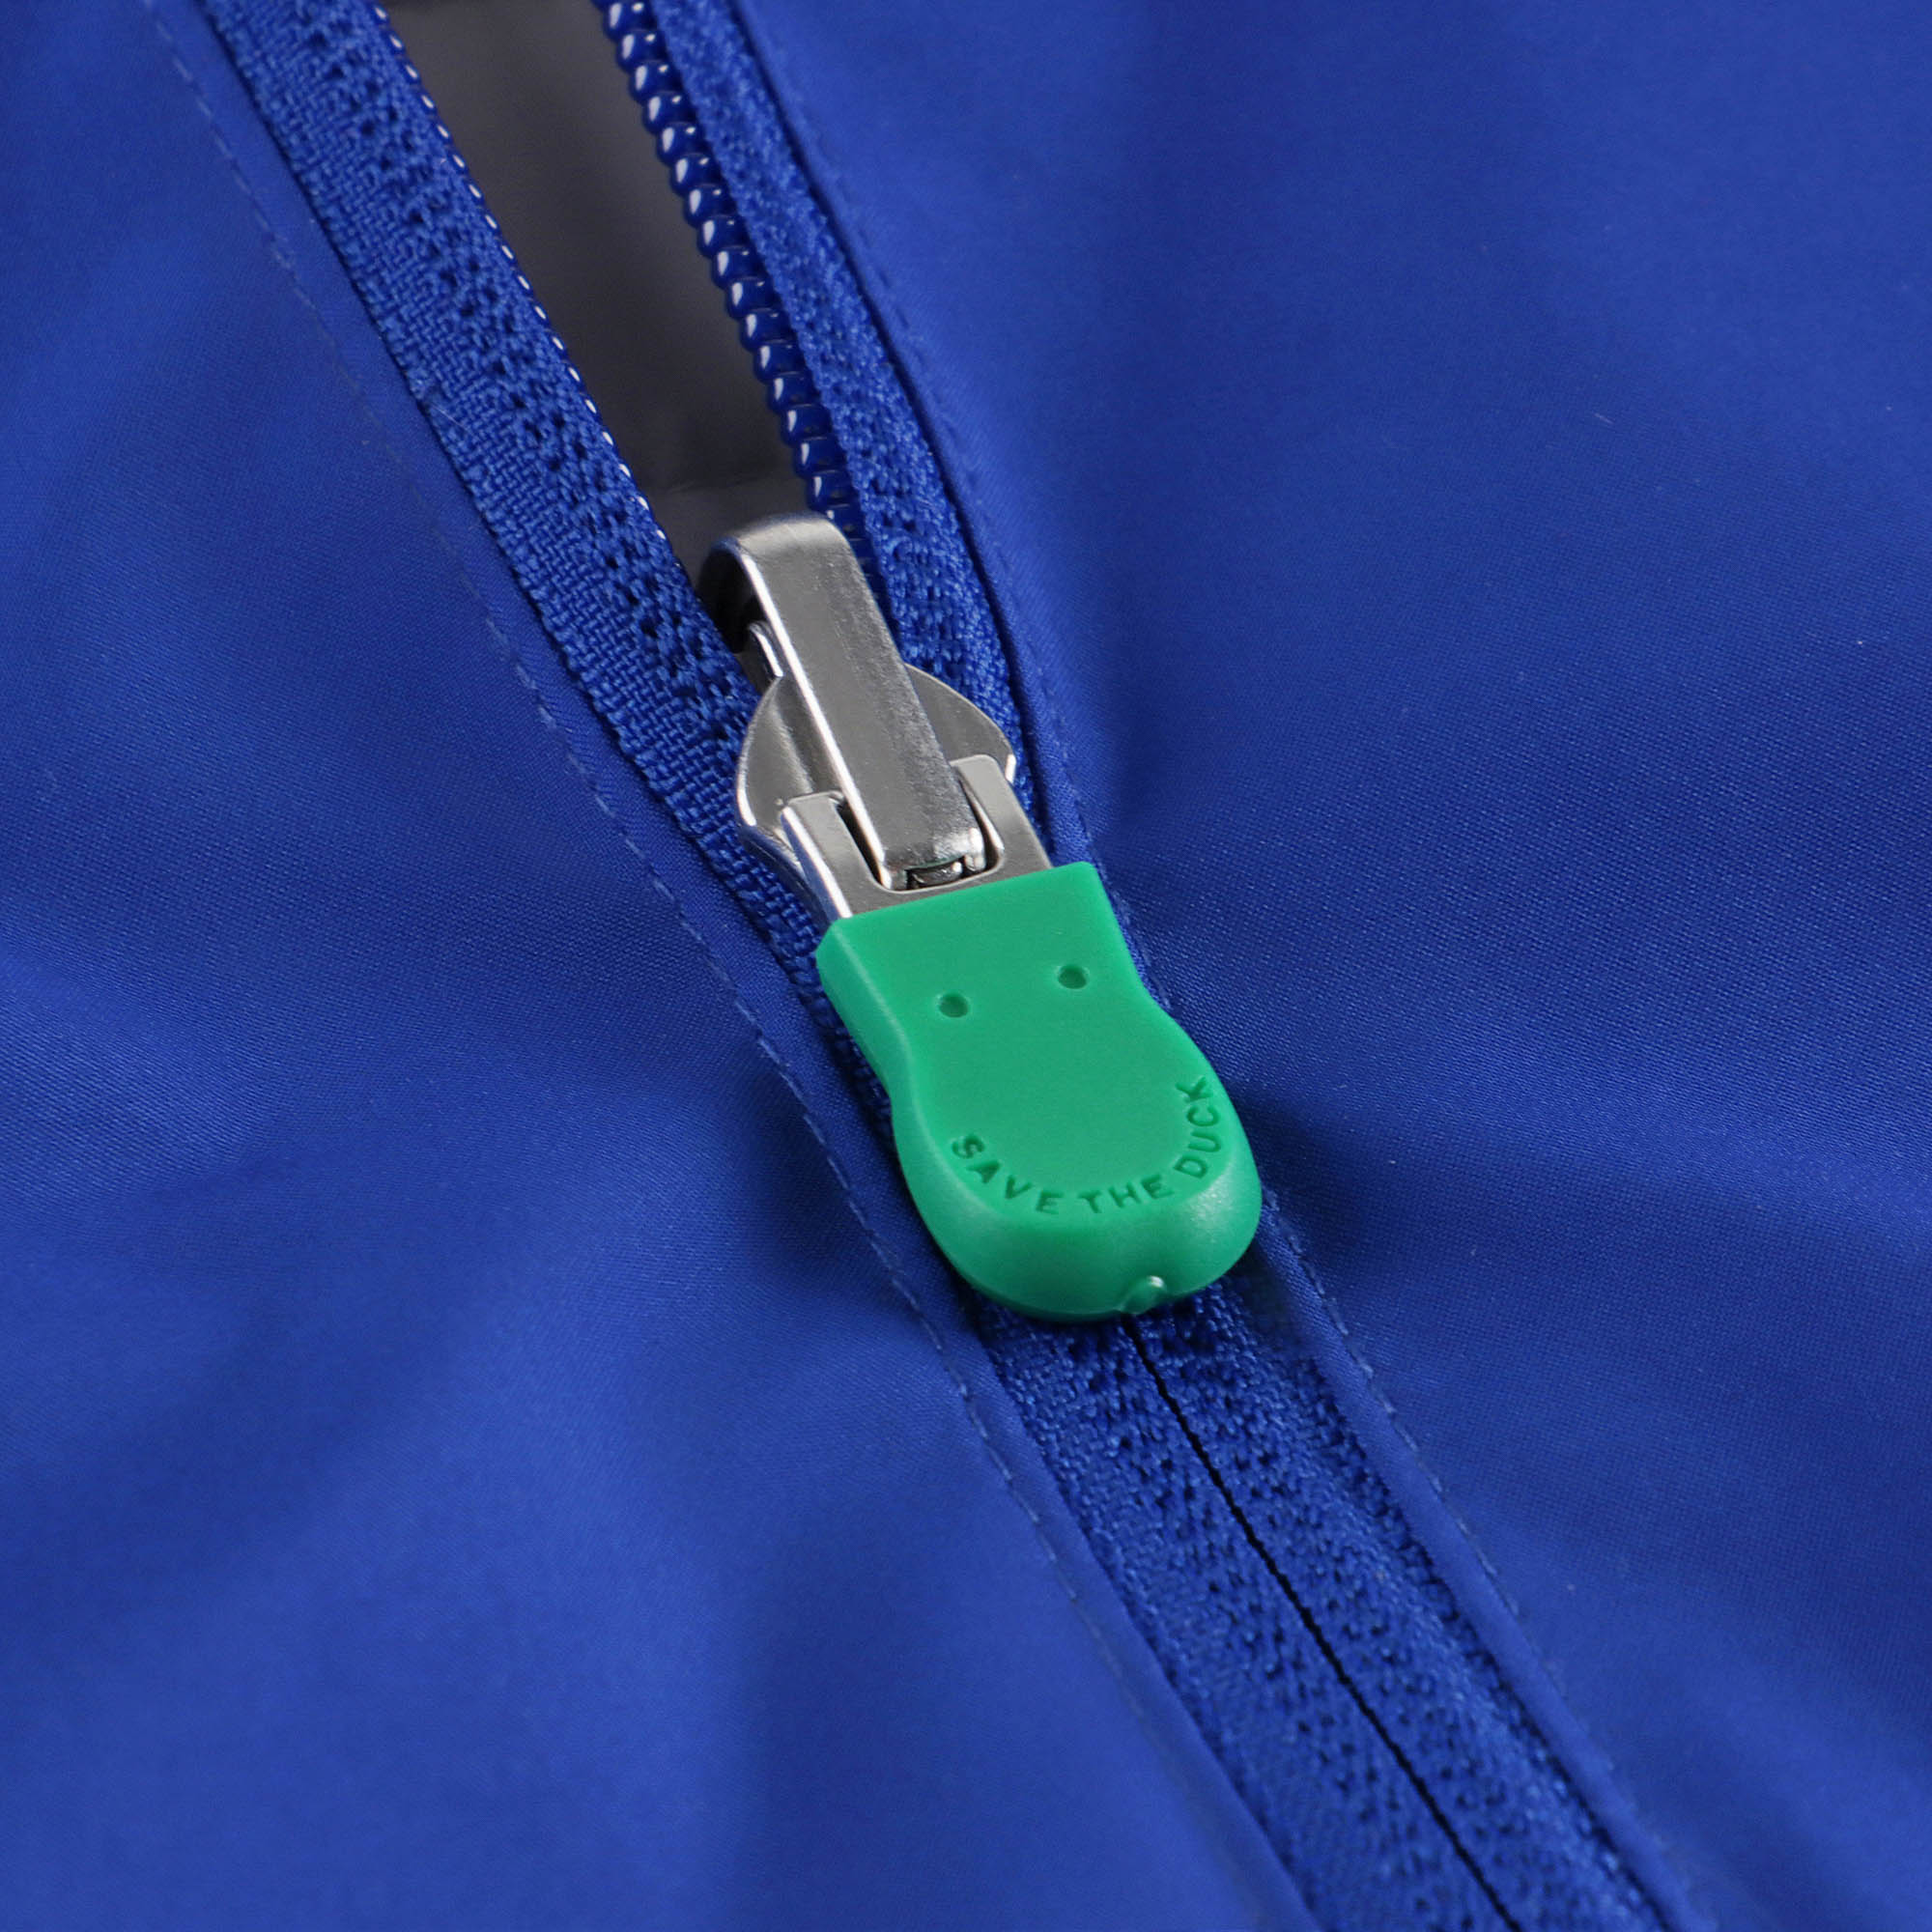 Boys & Girls Blue Hooded Reversible Padded Jacket